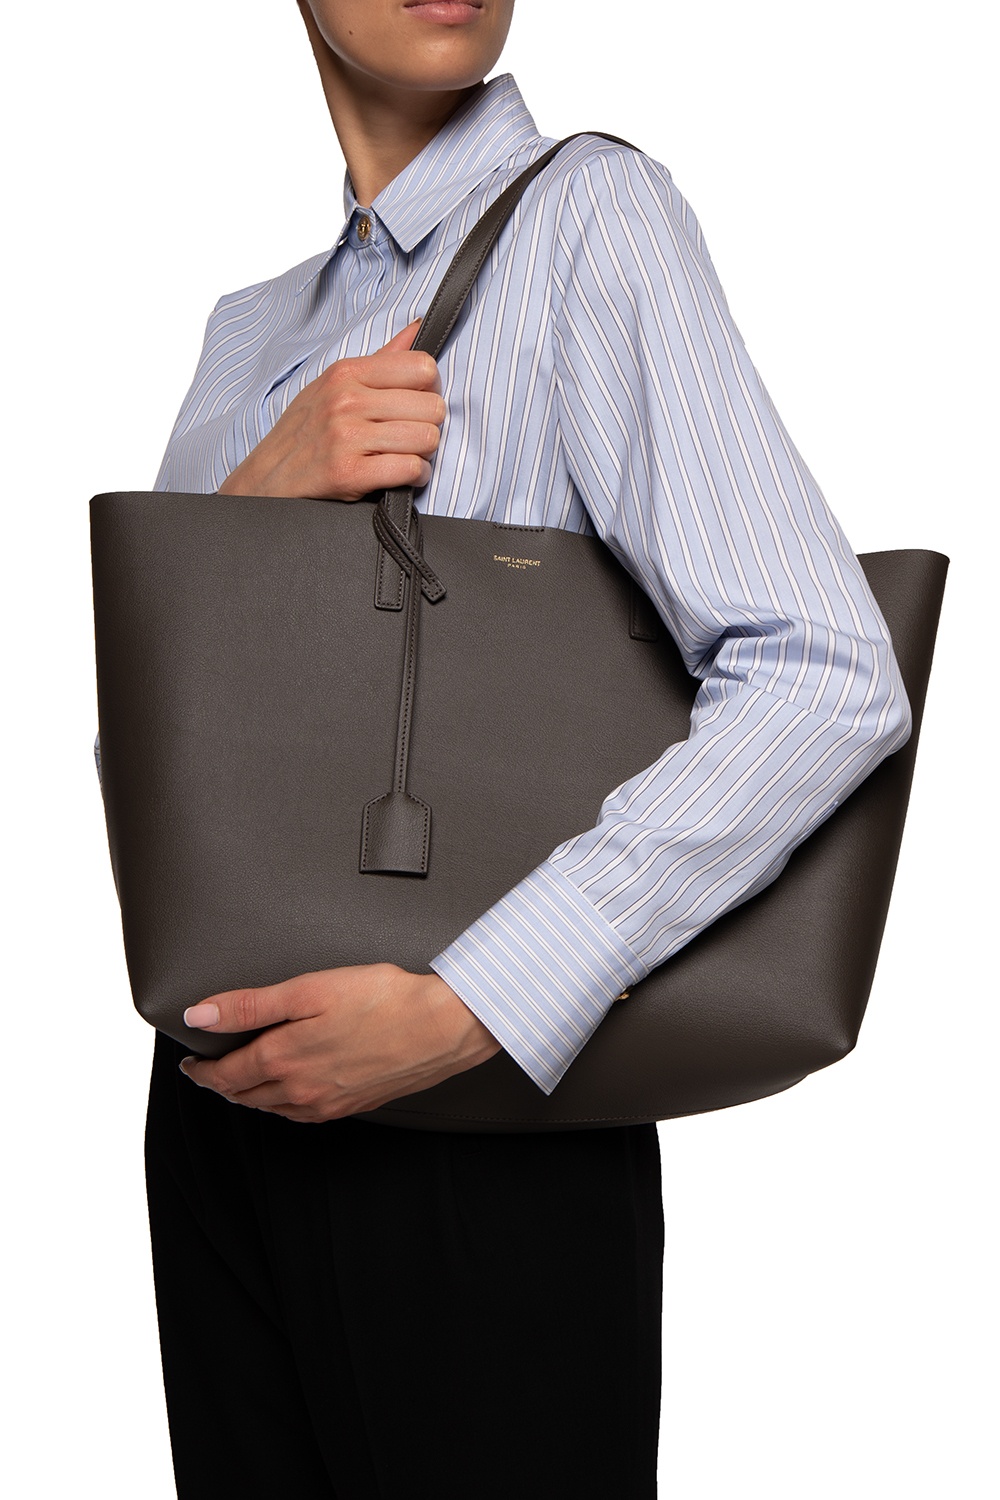 SAINT LAURENT: leather shopper bag - Navy  Saint Laurent shoulder bag  600281 CSV0J online at